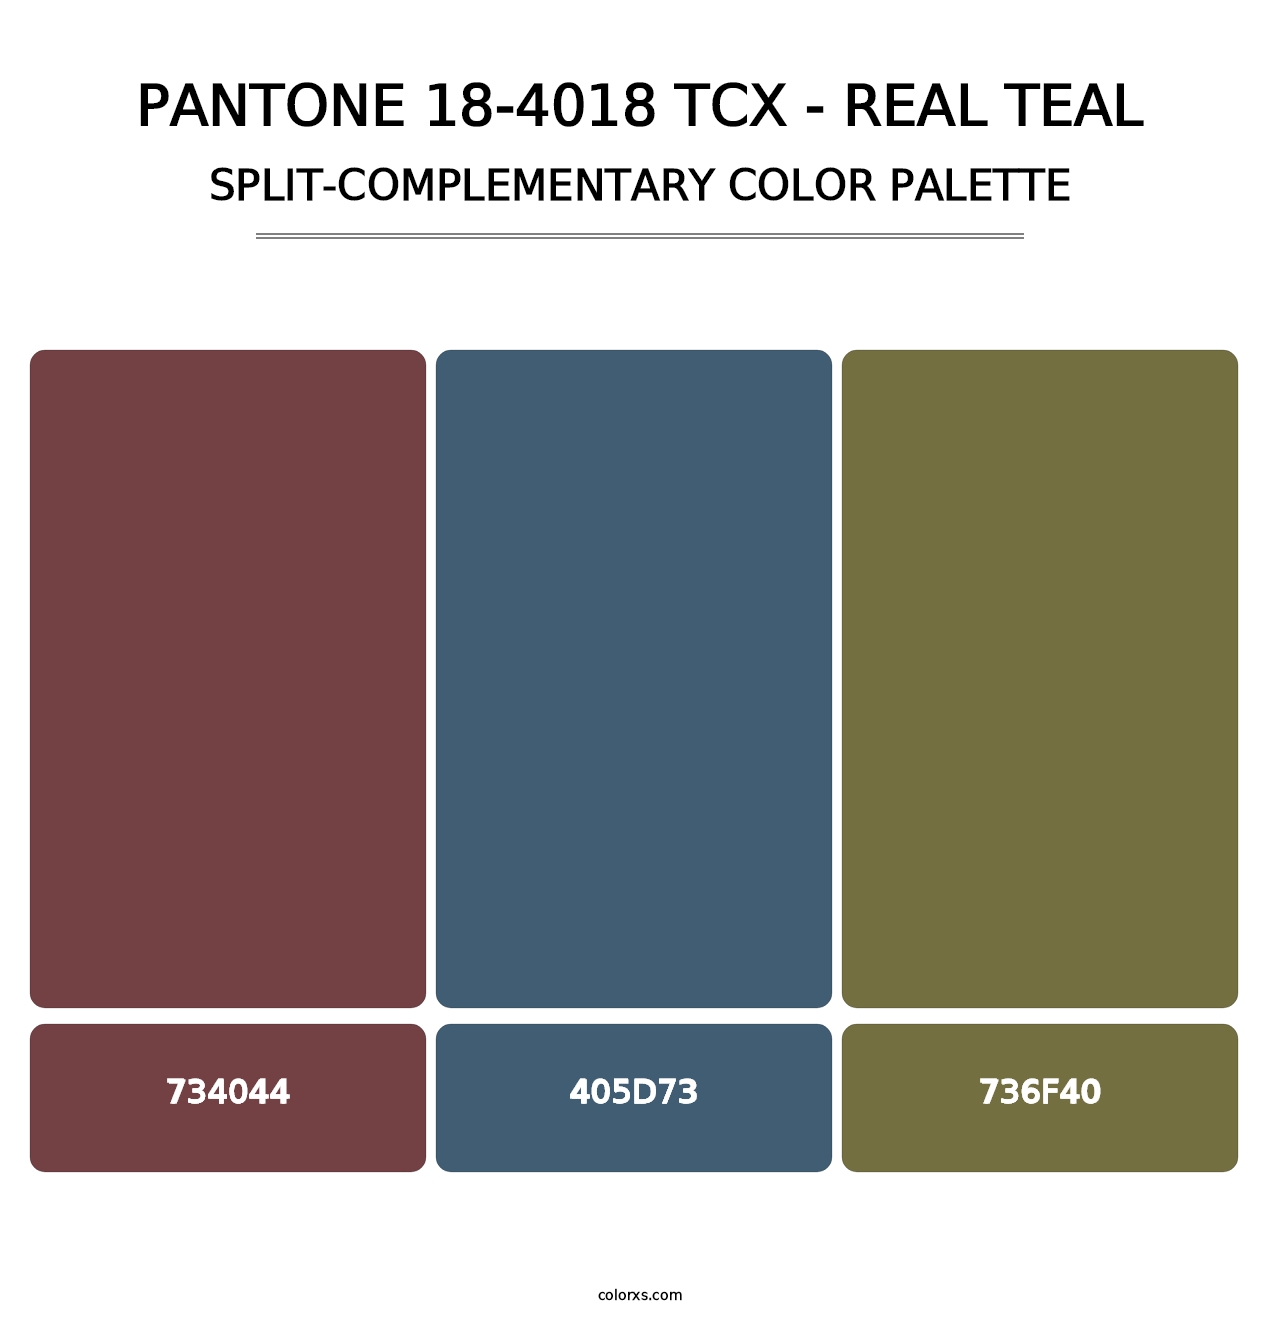 PANTONE 18-4018 TCX - Real Teal - Split-Complementary Color Palette